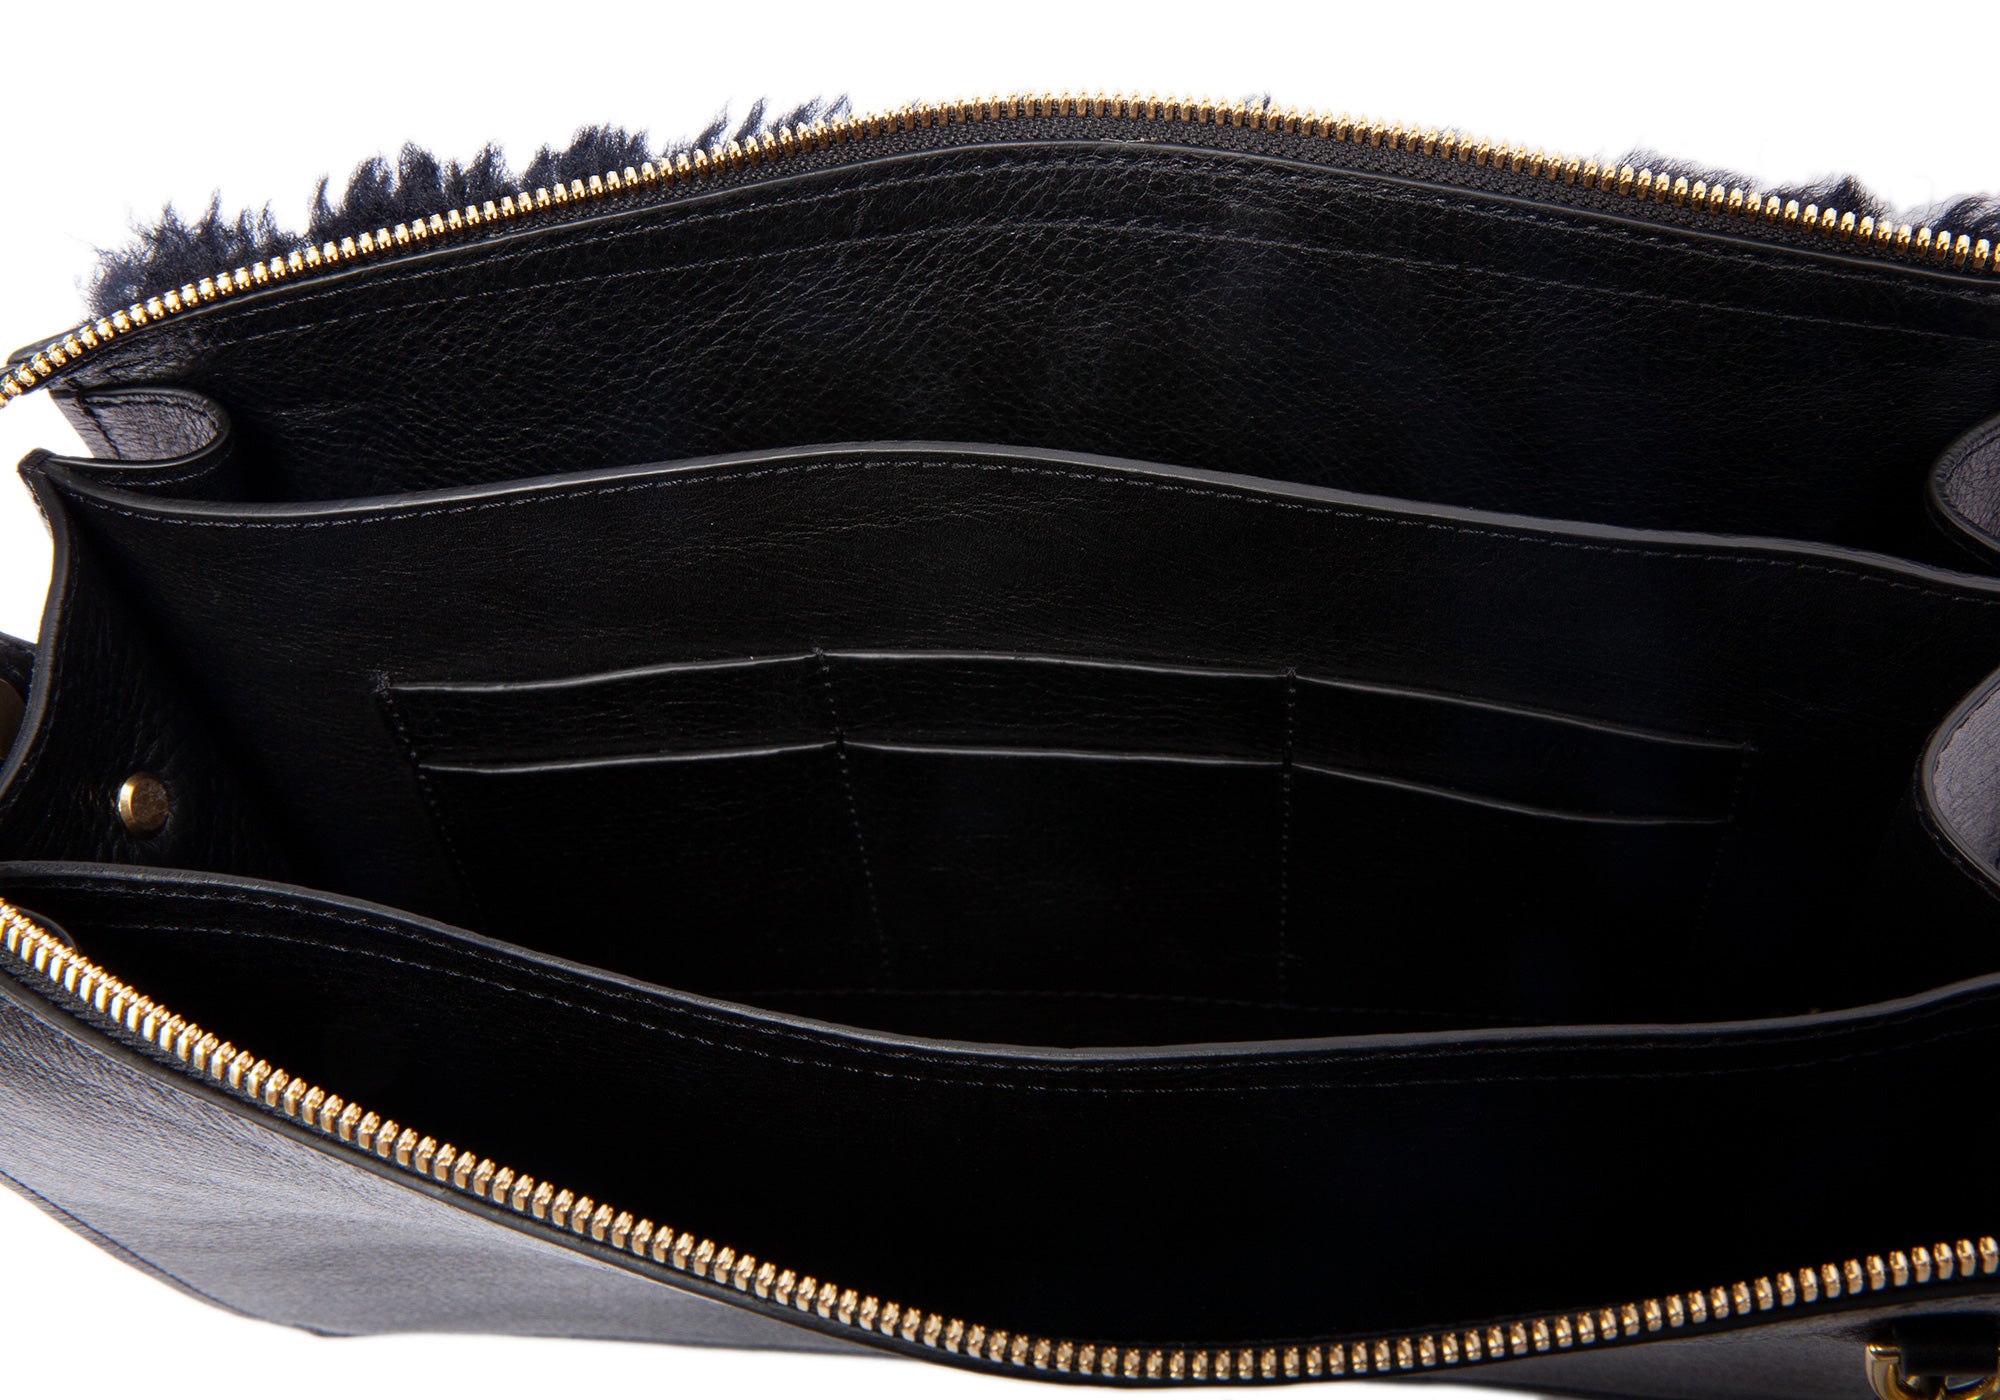 The Tripp II - Handmade Women's Leather Handbag and Purse